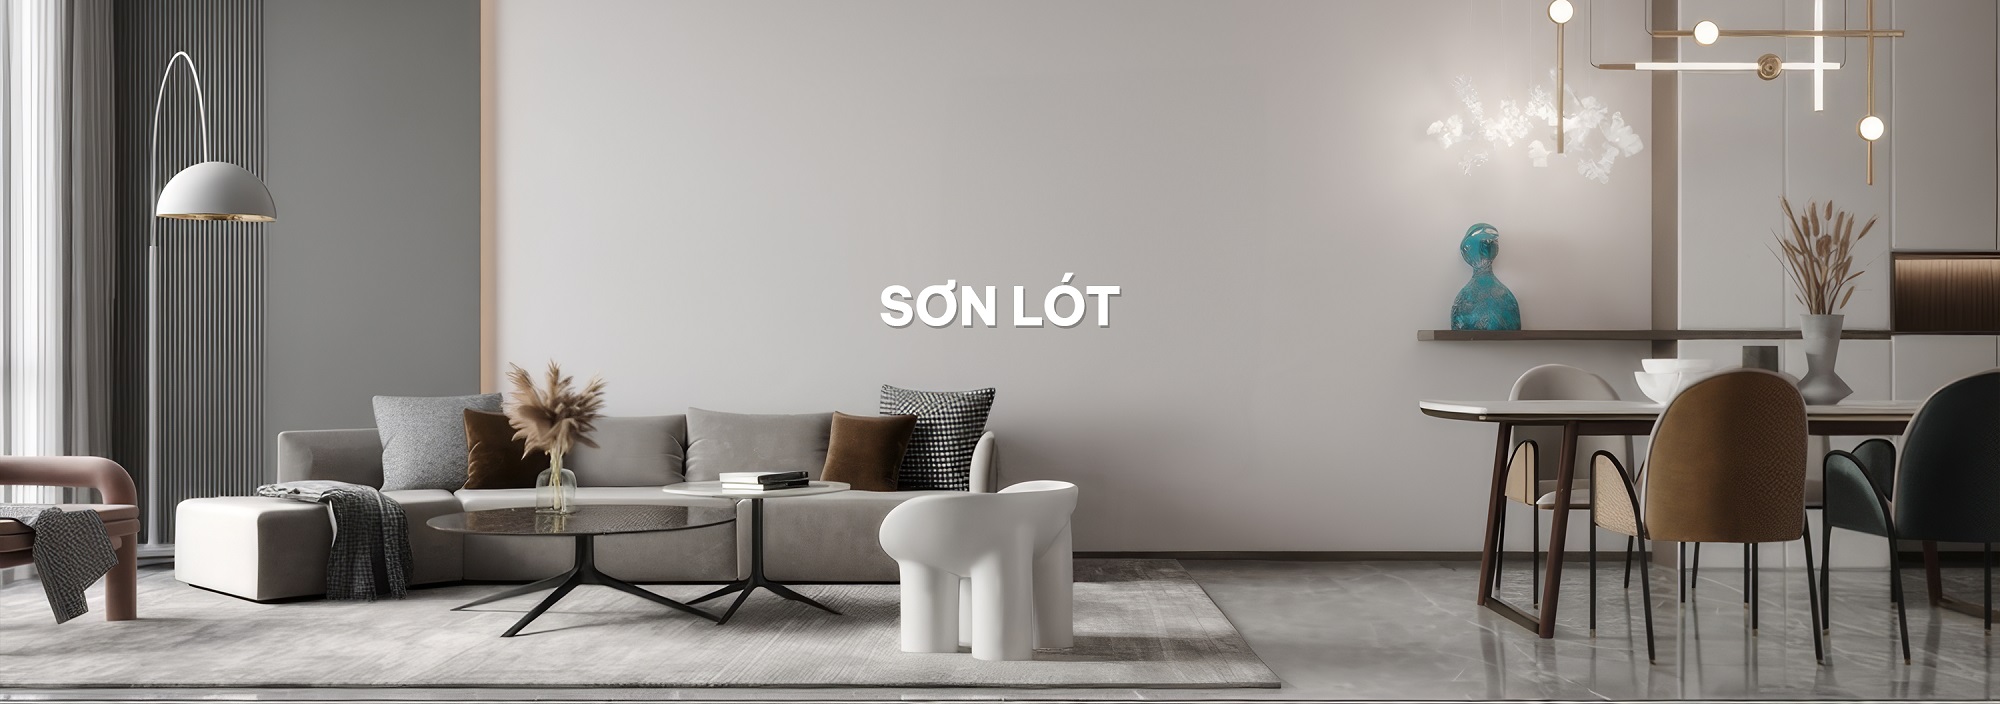 banner-son-lot